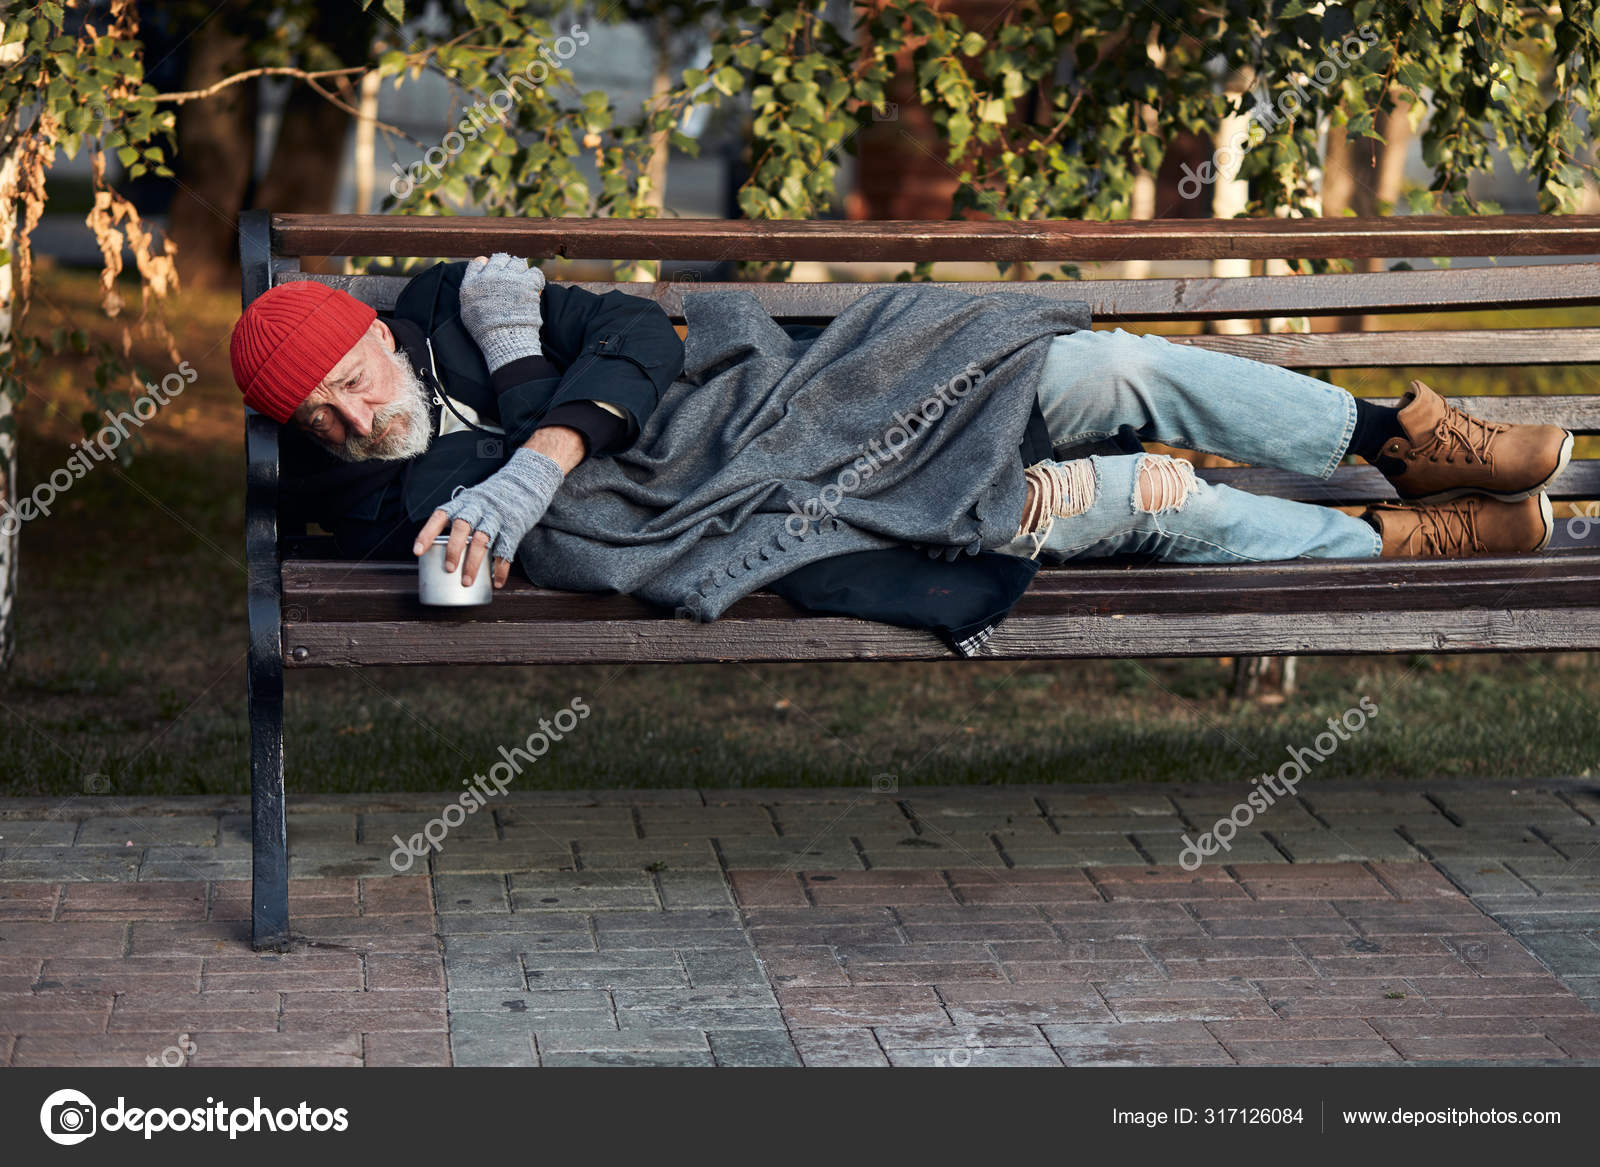 1 146 Homeless Man Bench Stock Photos Free Royalty Free Homeless Man Bench Images Depositphotos